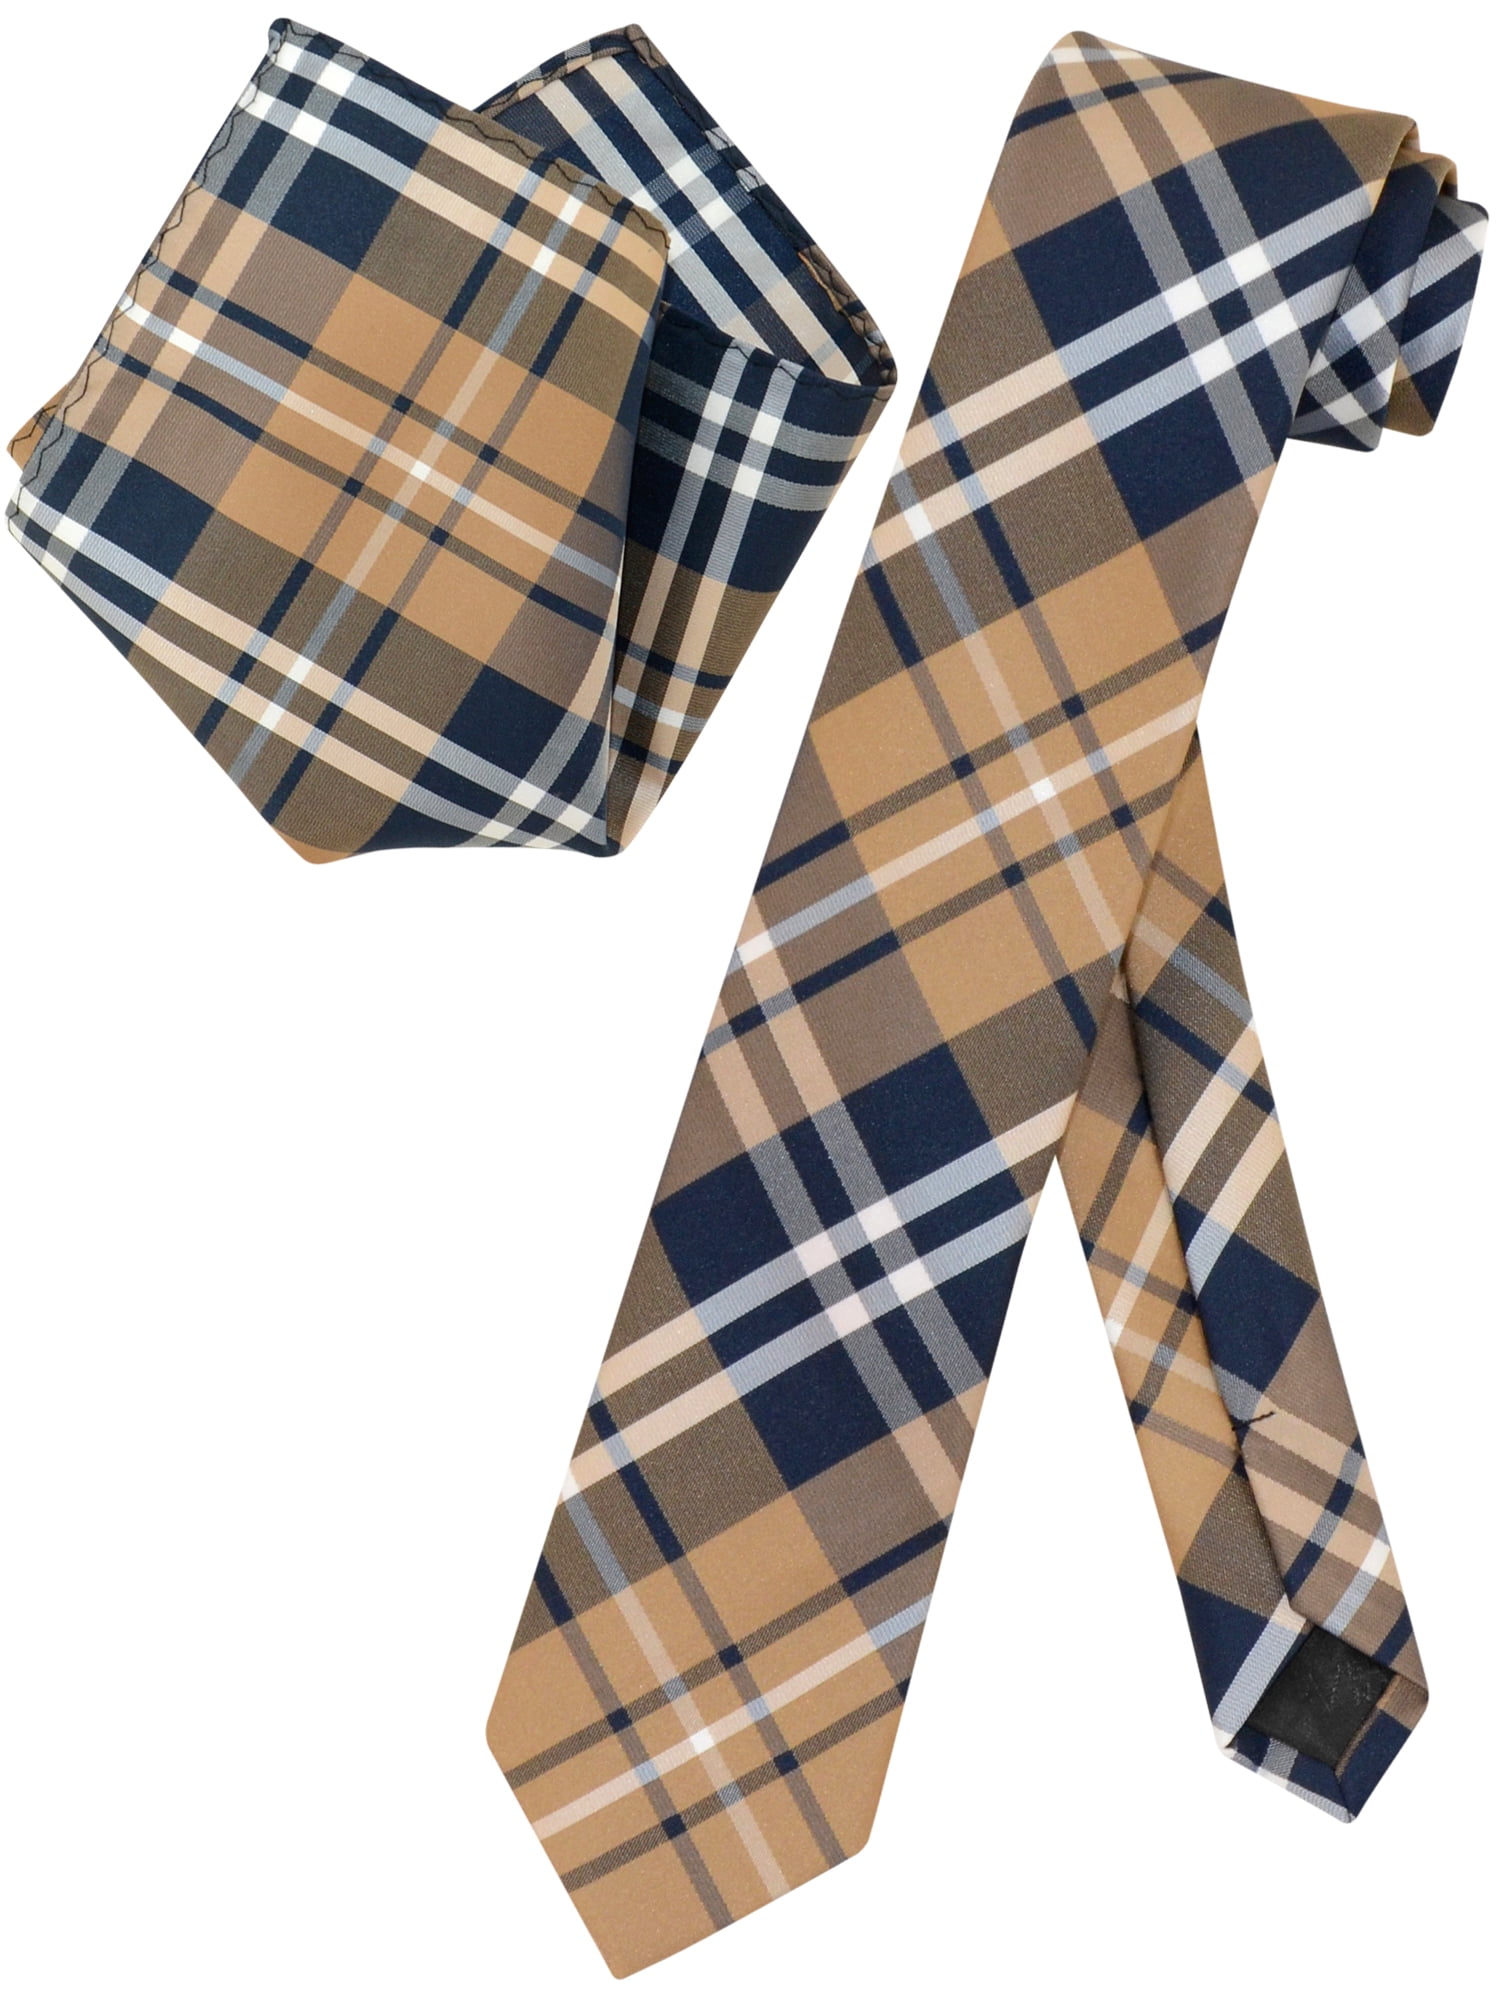 New Men's Vesuvio Napoli plaid checkered Neck Tie Necktie & hankie set gray 